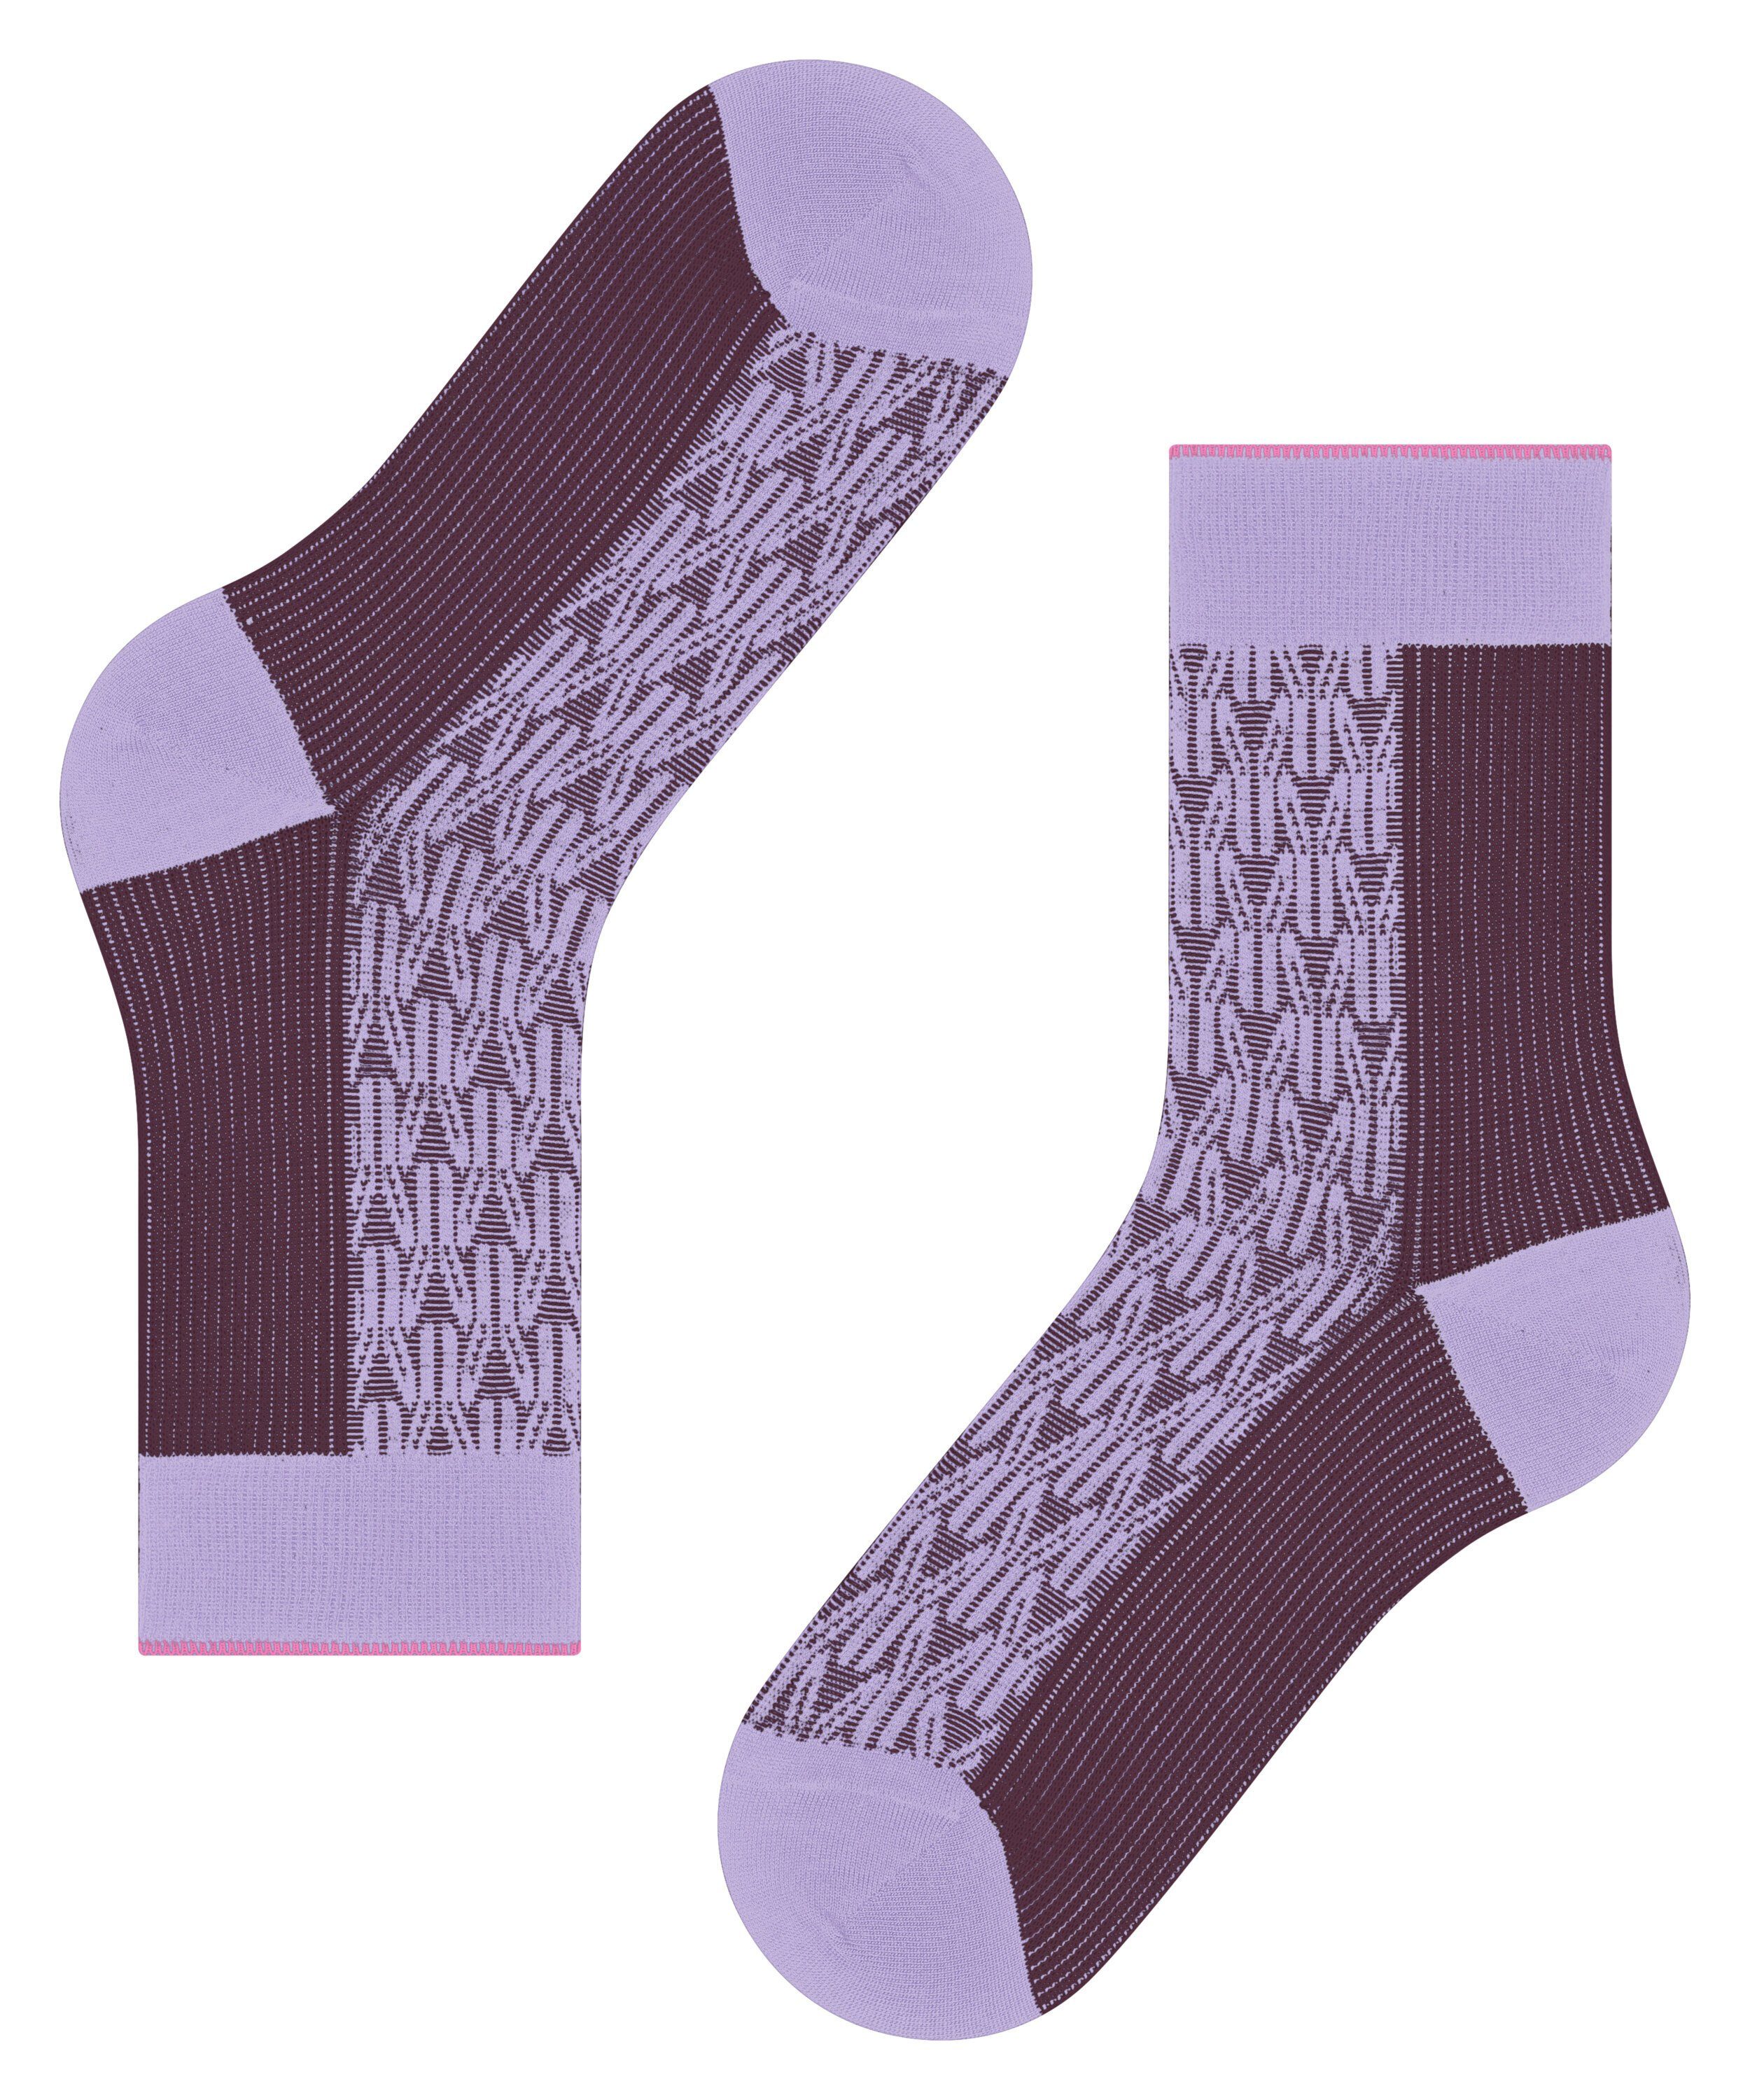 Immersive (1-Paar) Socken Mesh FALKE (6903) lupine